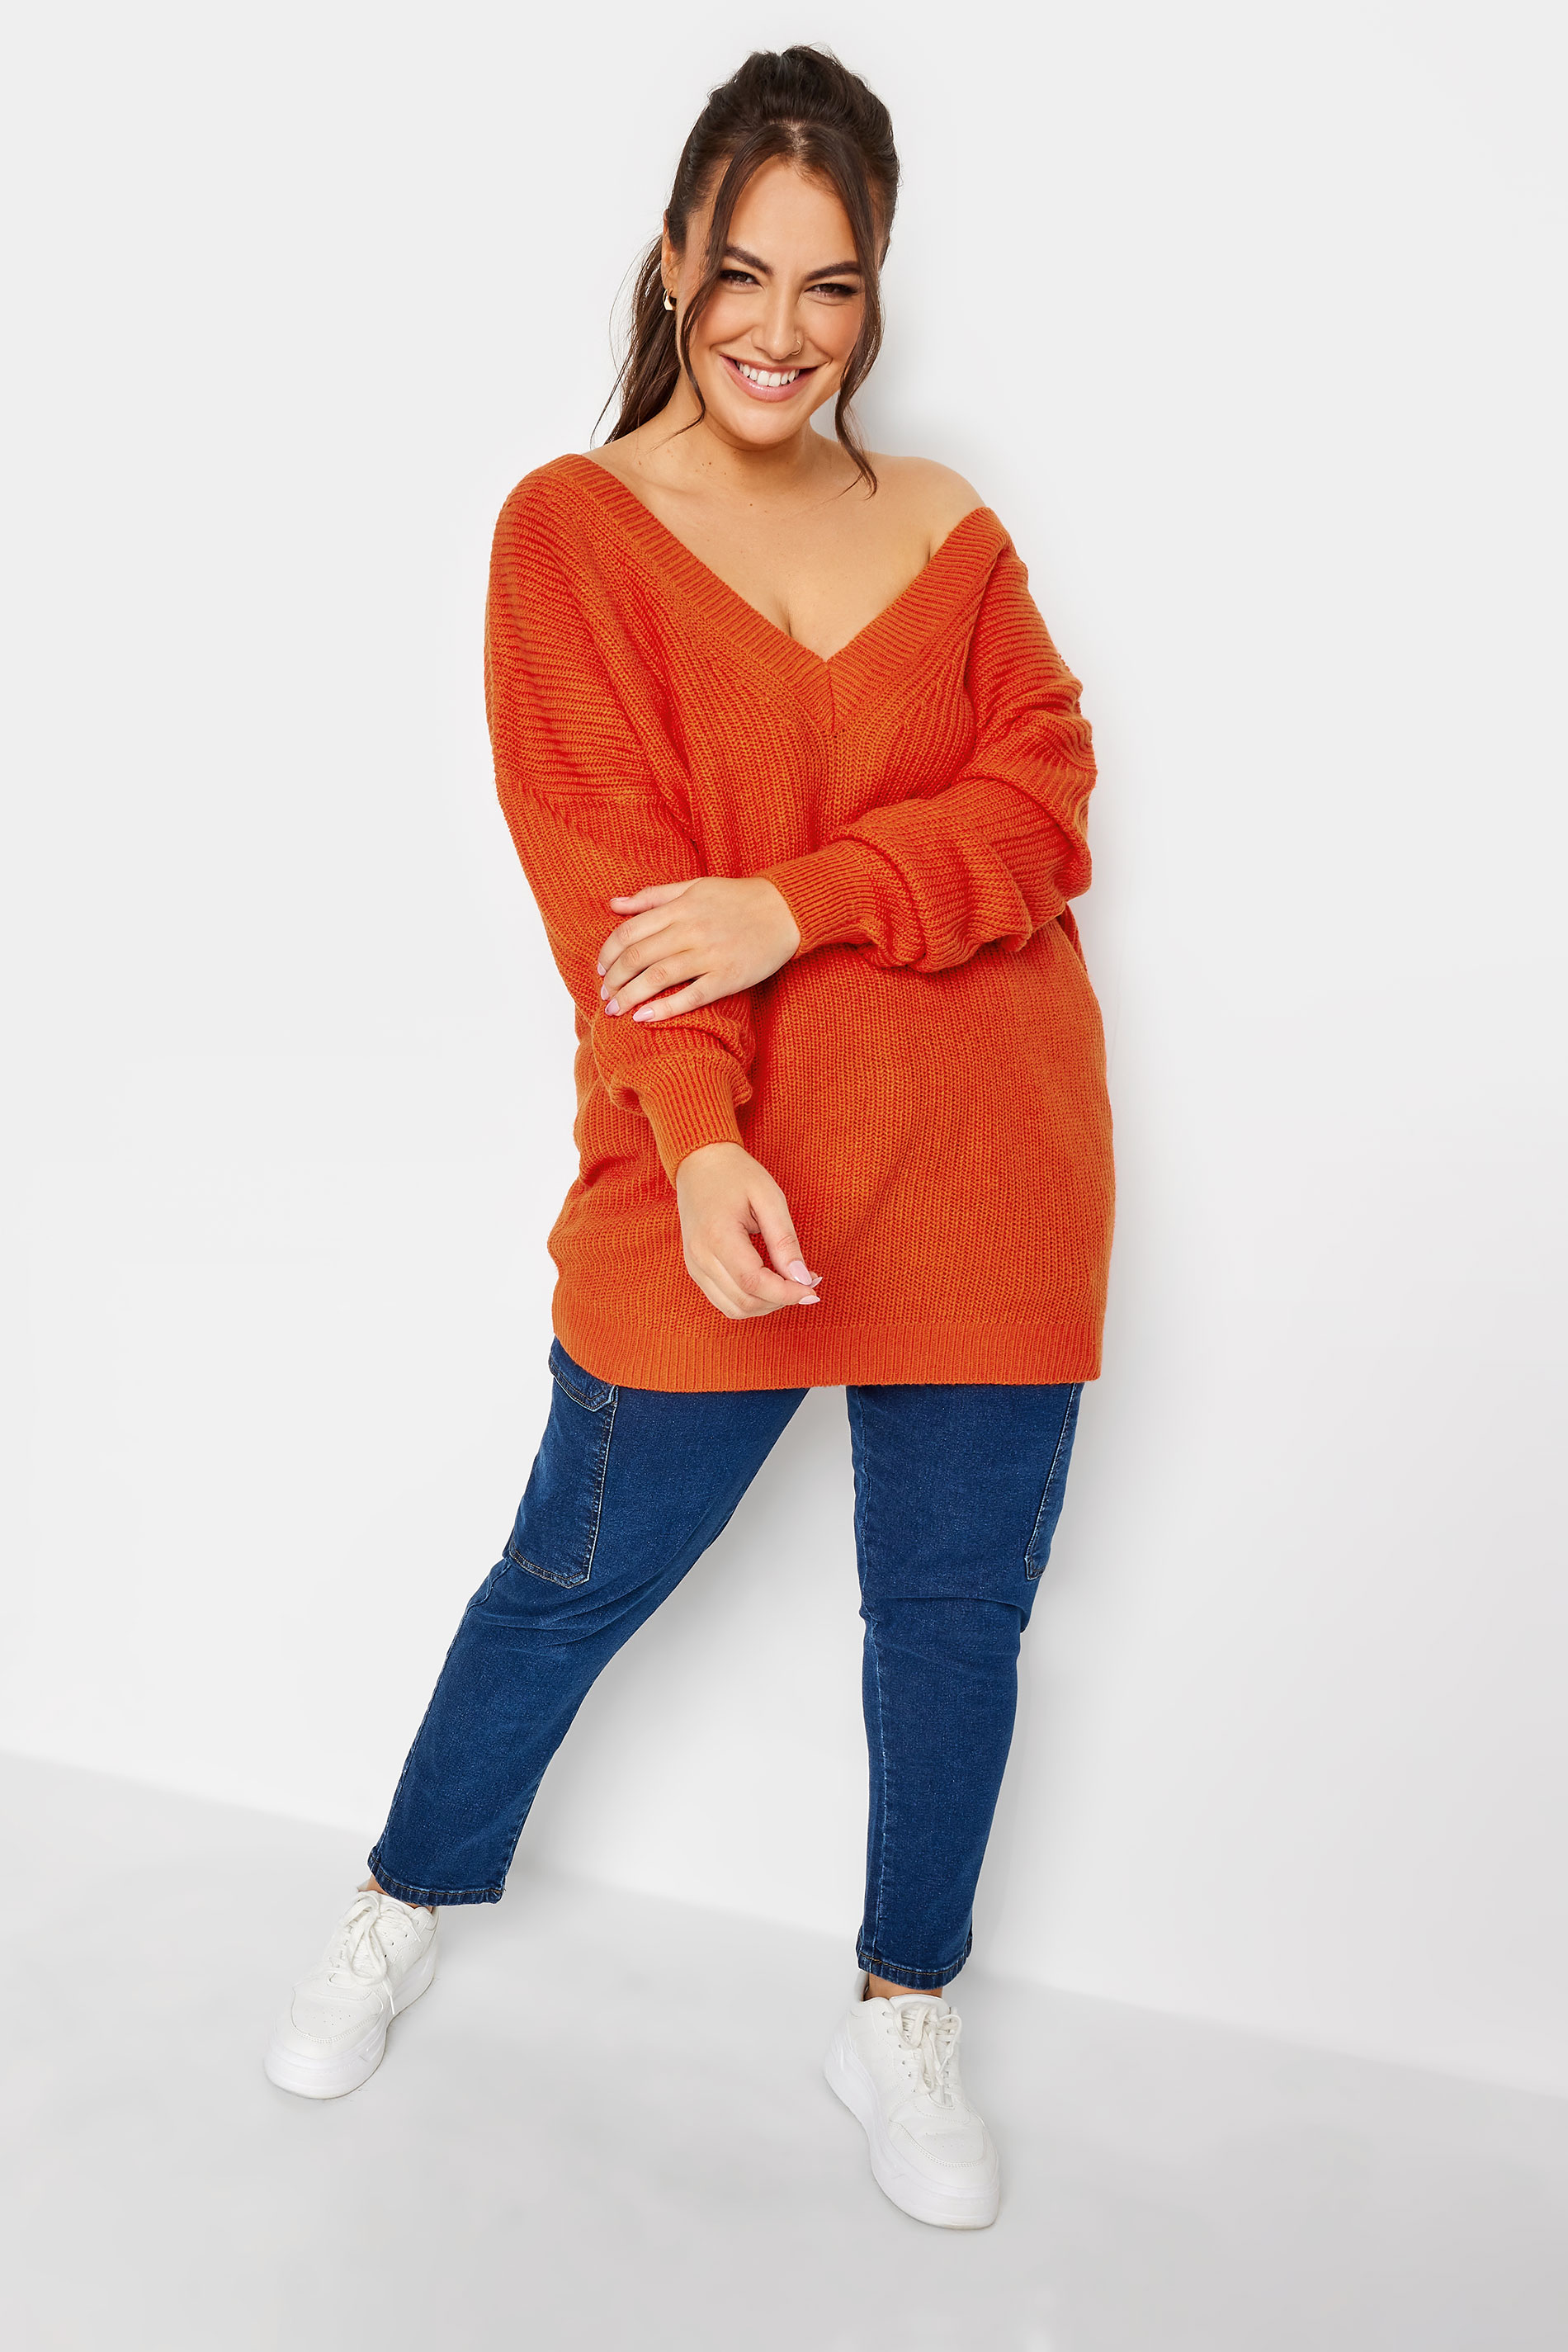 YOURS Plus Size Orange Double V-Neck Jumper | Yours Clothing 2